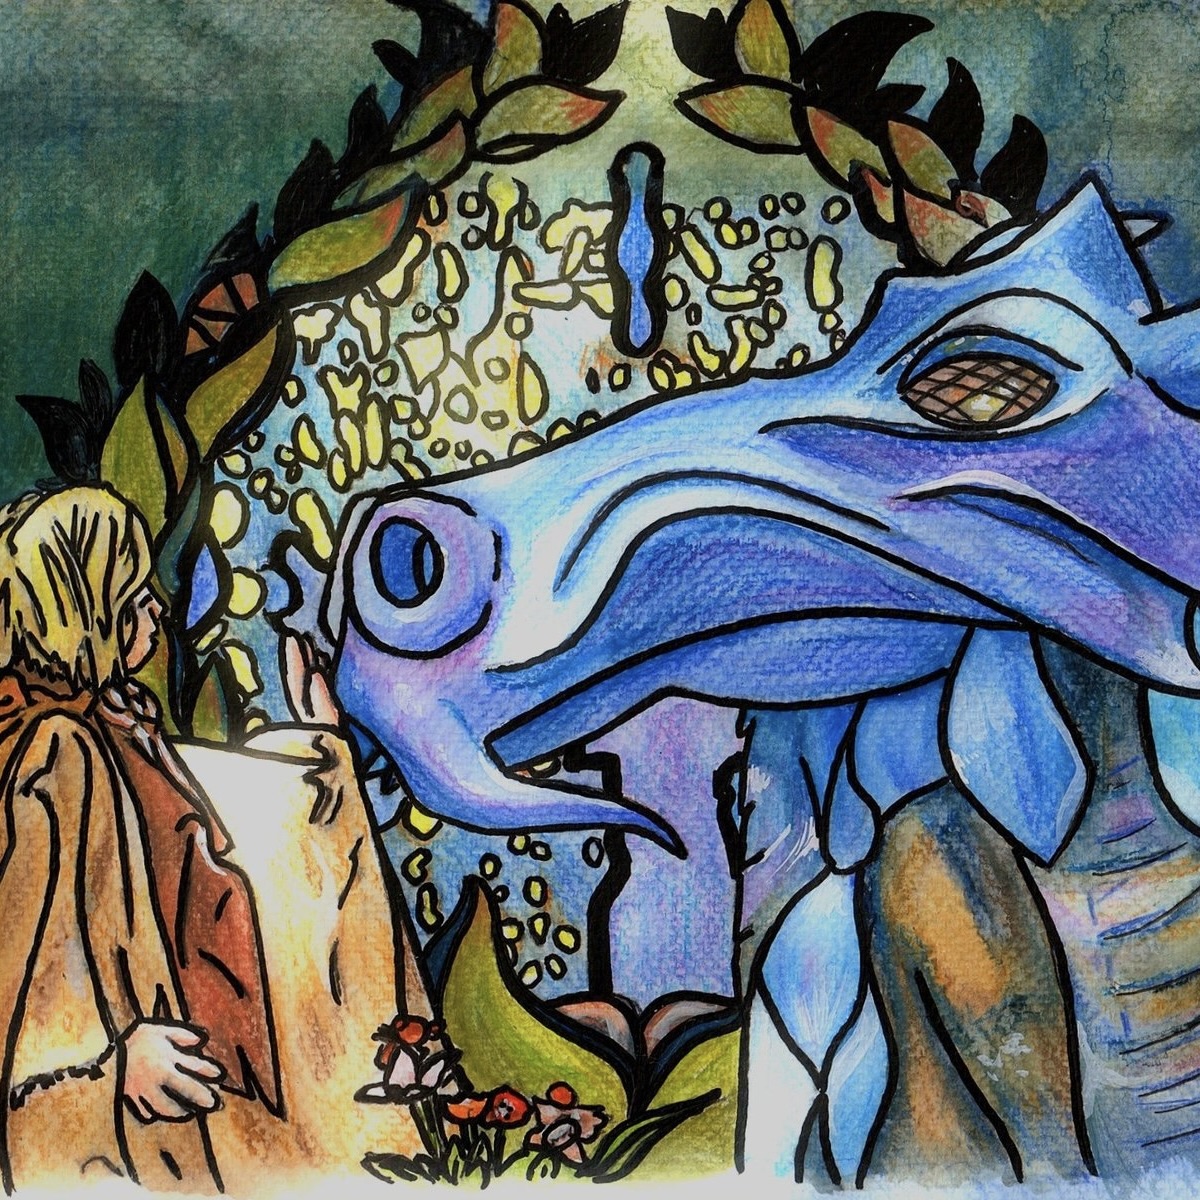 blond girl and blue dragon illustration